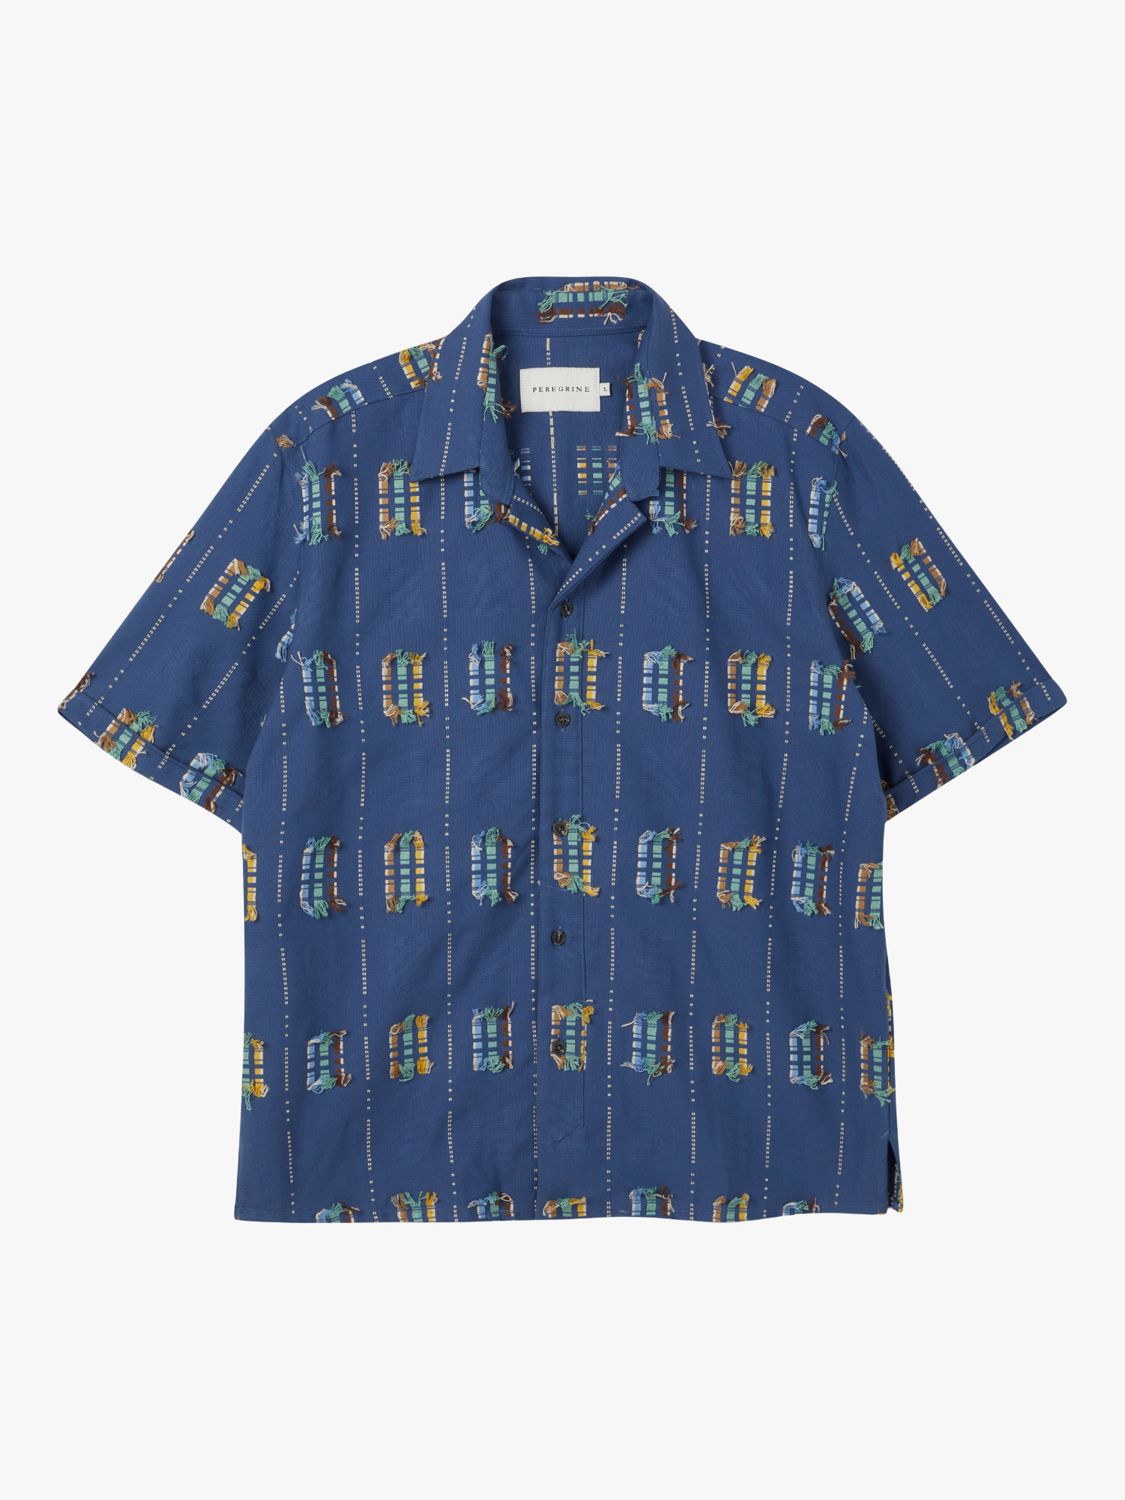 Peregrine Creek Short Sleeve Shirt, Blue/Multi, S